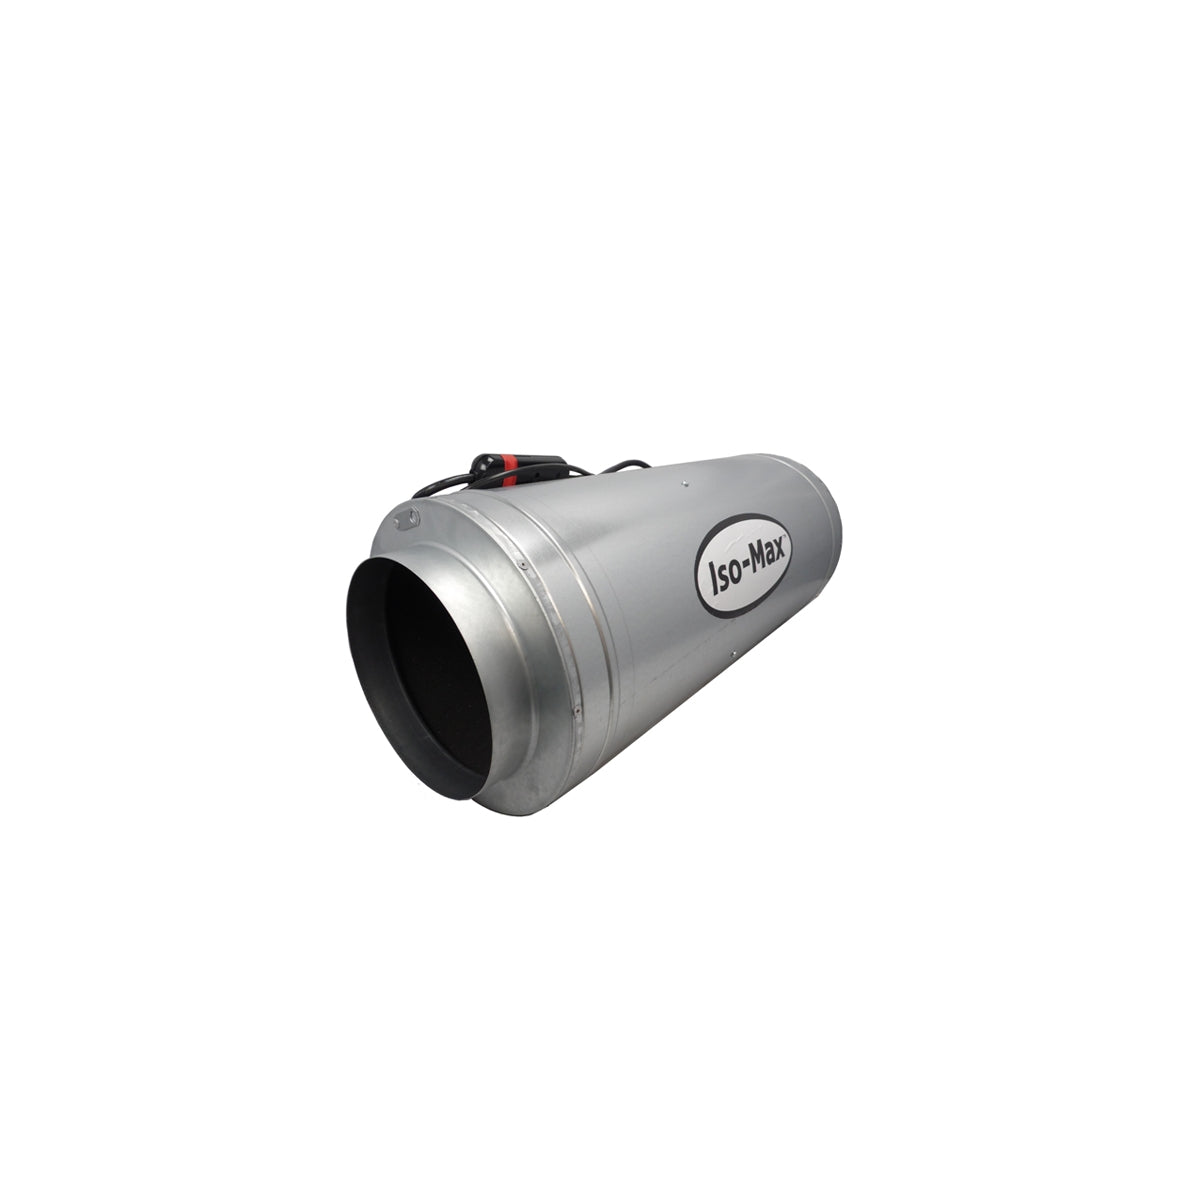 1-Gang-Absaugung ISO-Max 2310 m3/h – 250 mm – Can-Fan